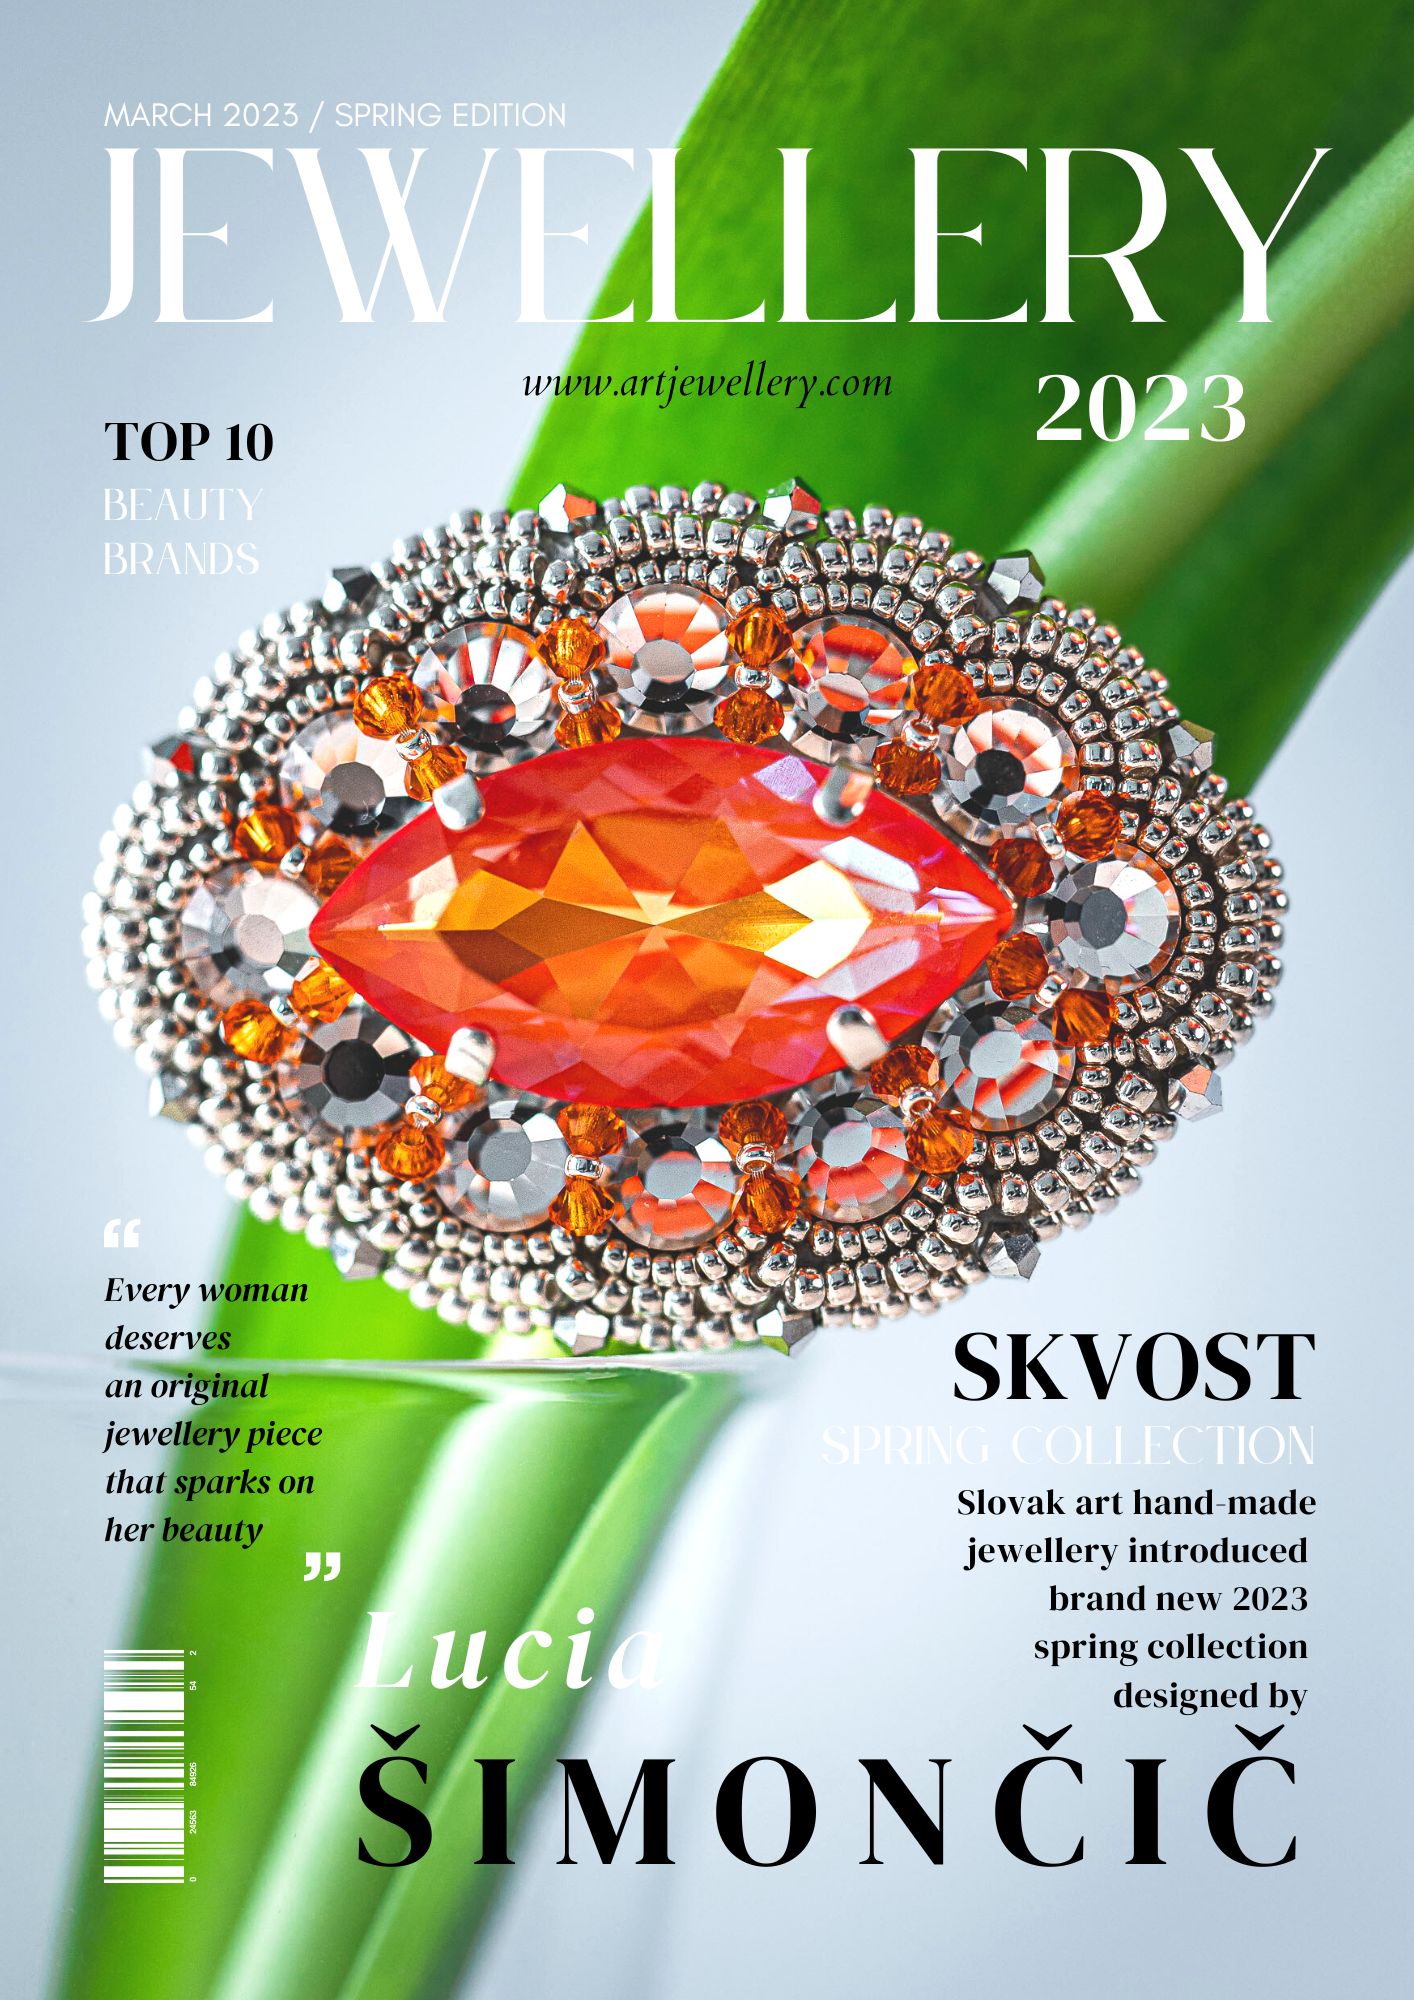 Jewellery magazine cover by Zuzana Rainet, Product Photographer from Bratislava Slovakia